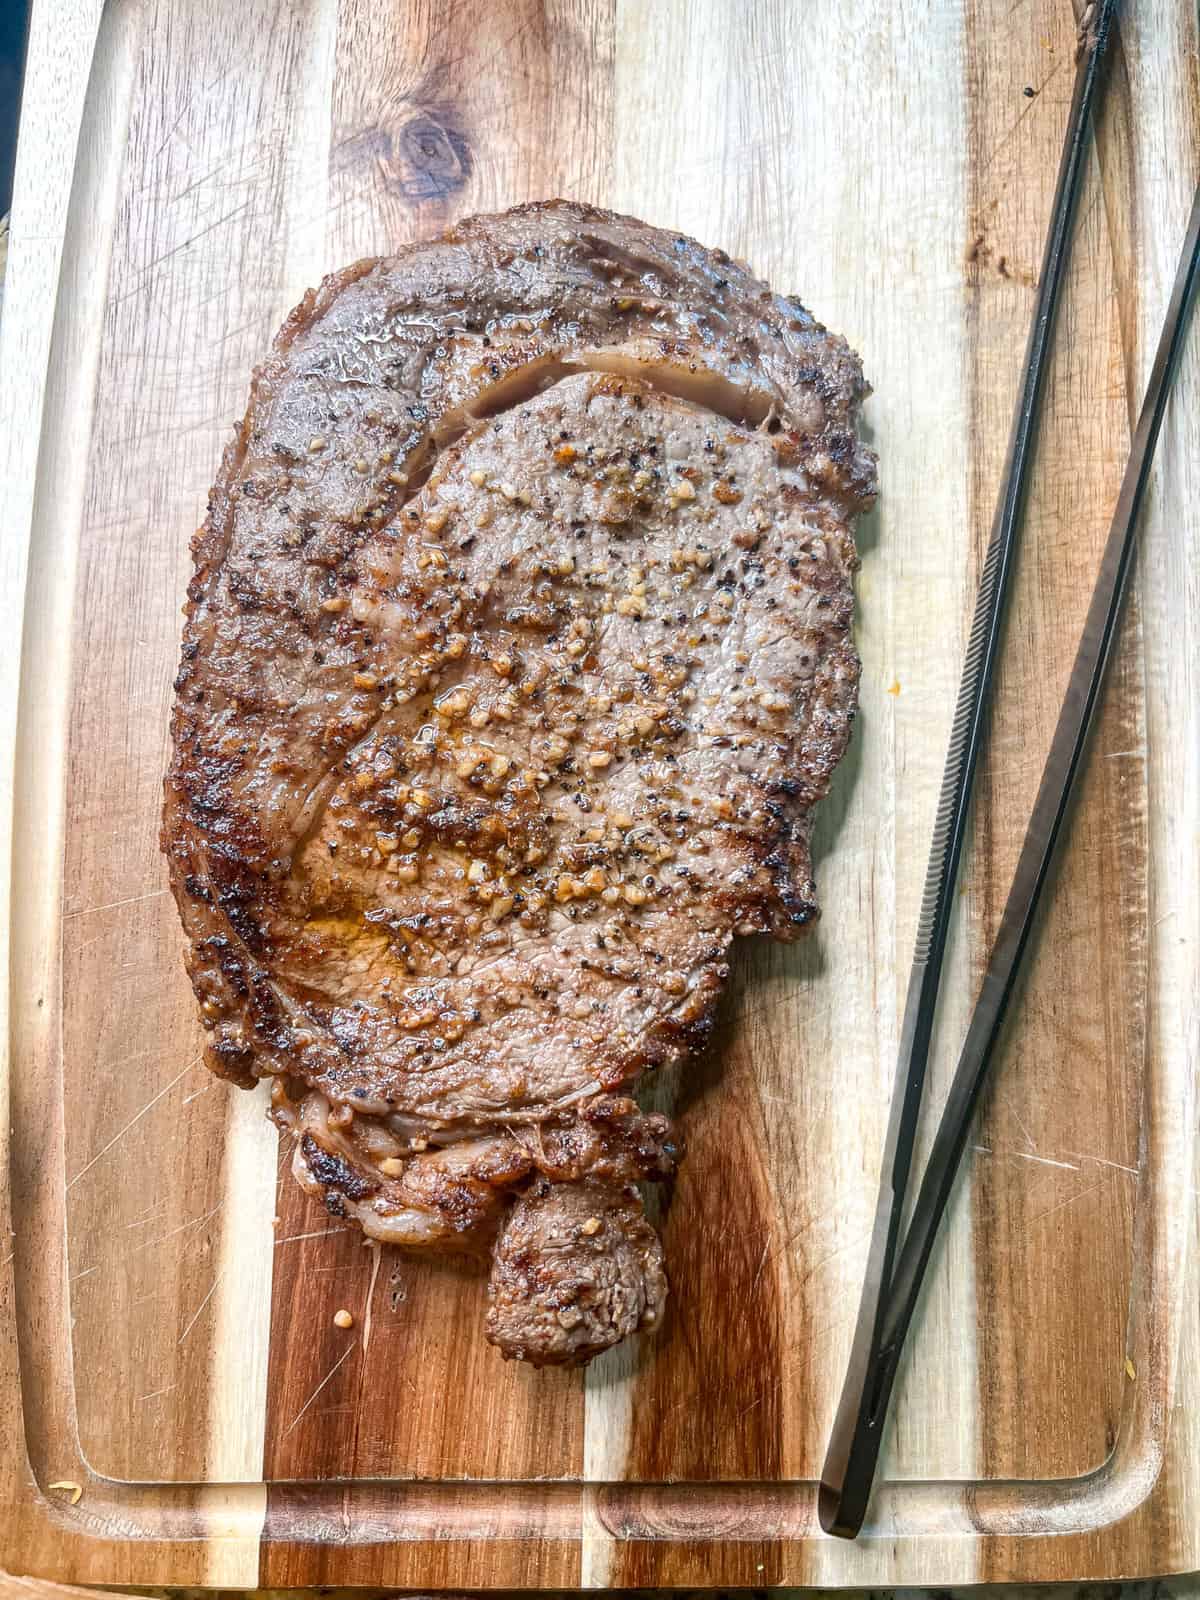 Cooked ribeye steak on a cutting board